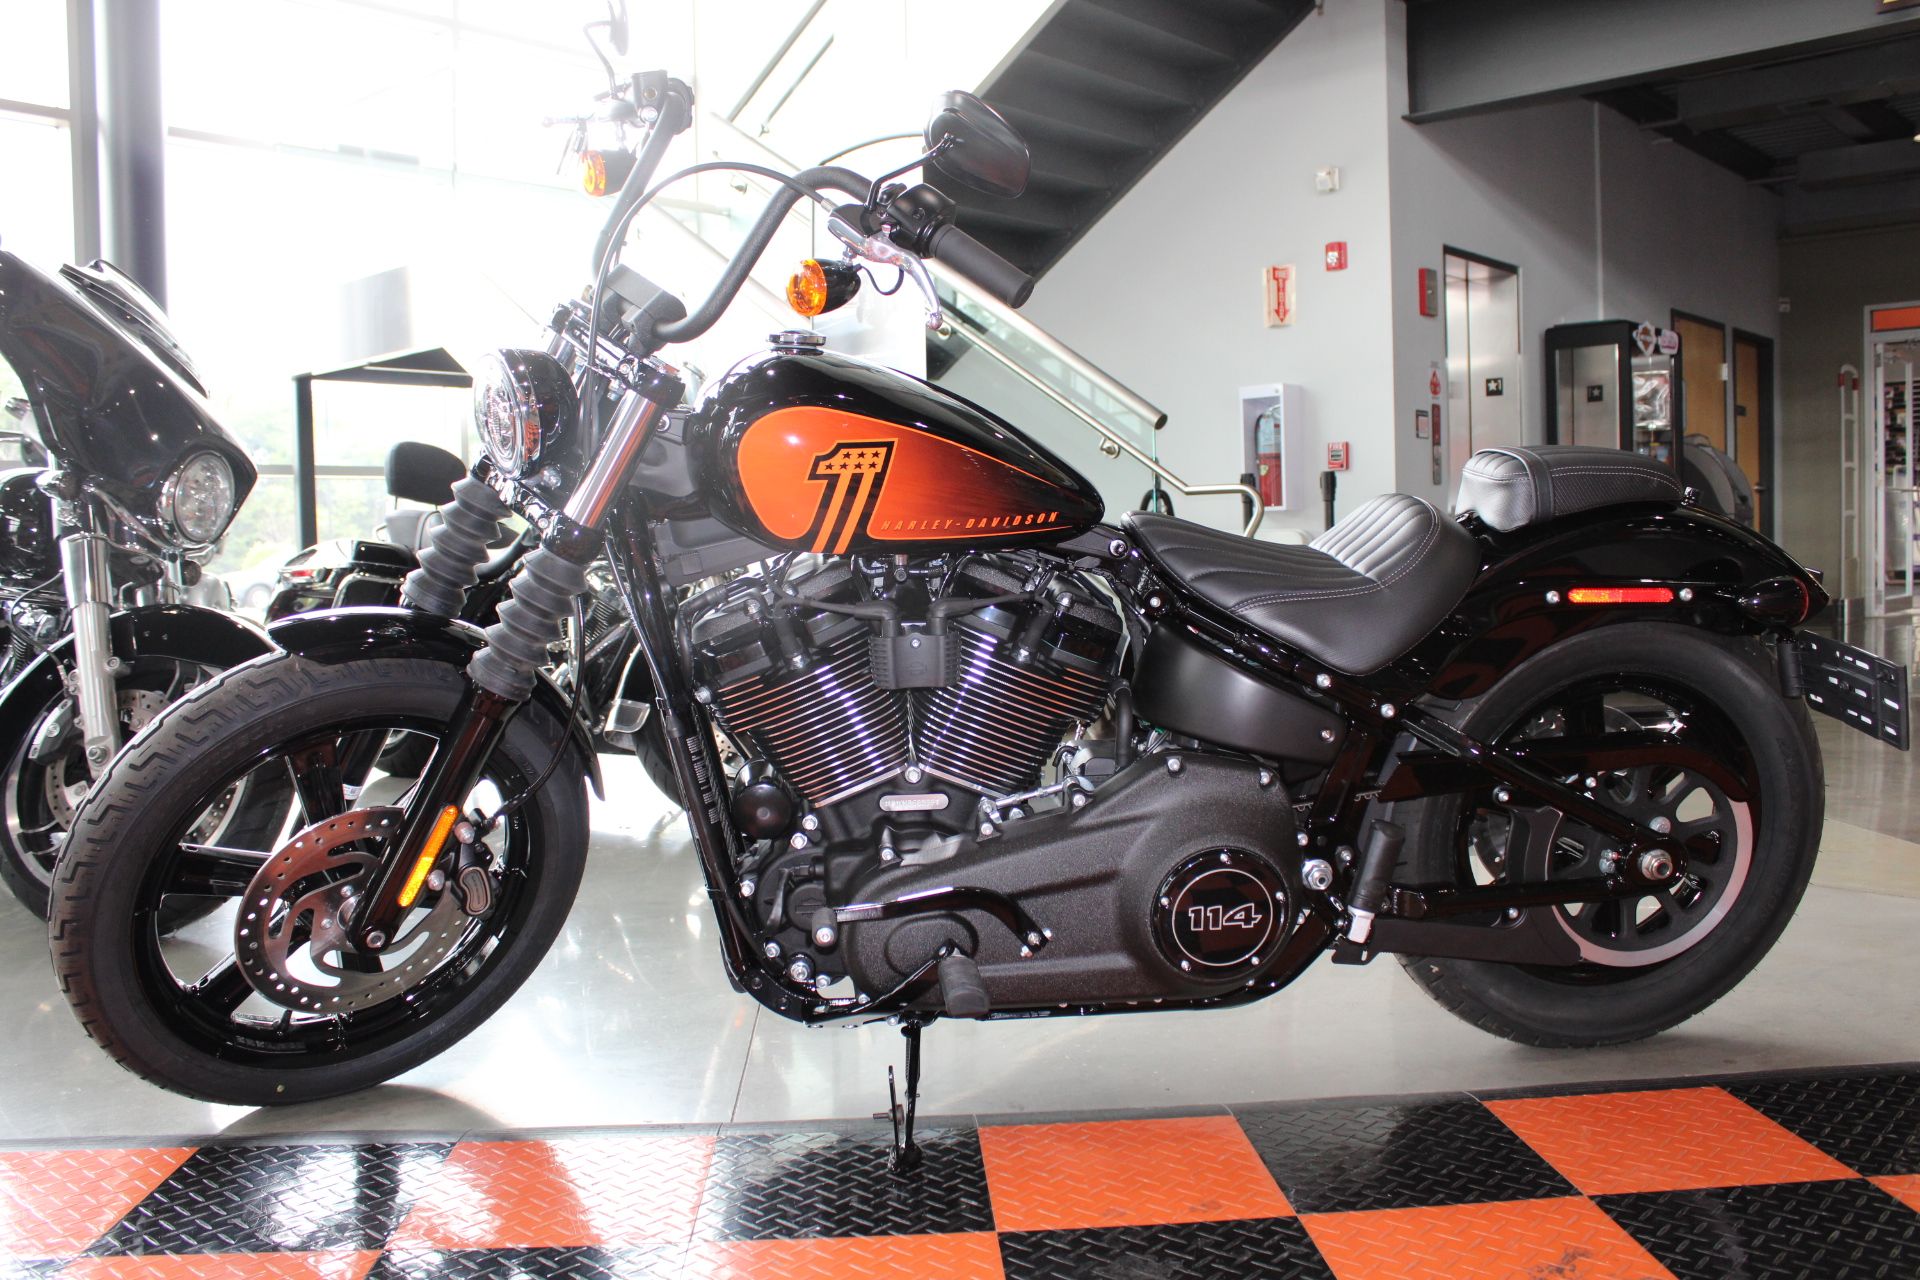 2022 Harley-Davidson Street Bob® 114 in Shorewood, Illinois - Photo 19